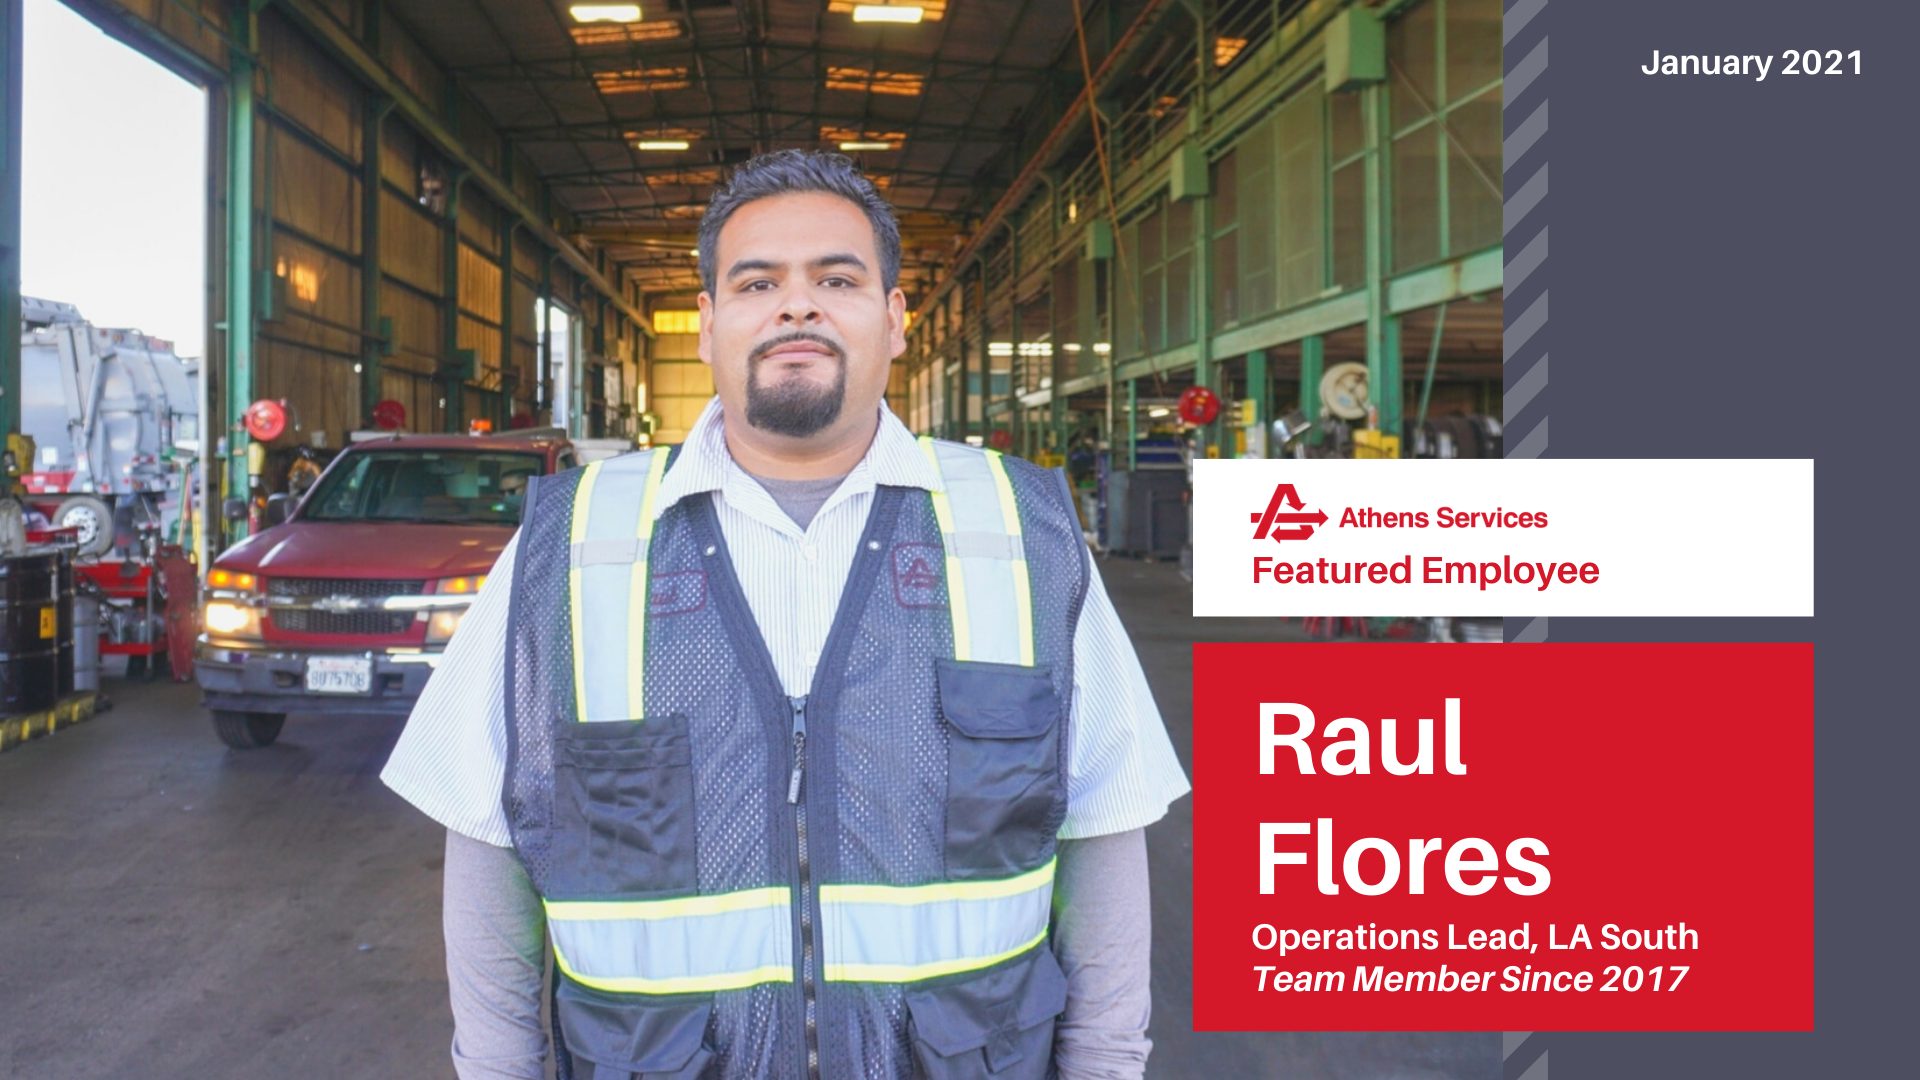 Raul Flores Employee Highlight (1)